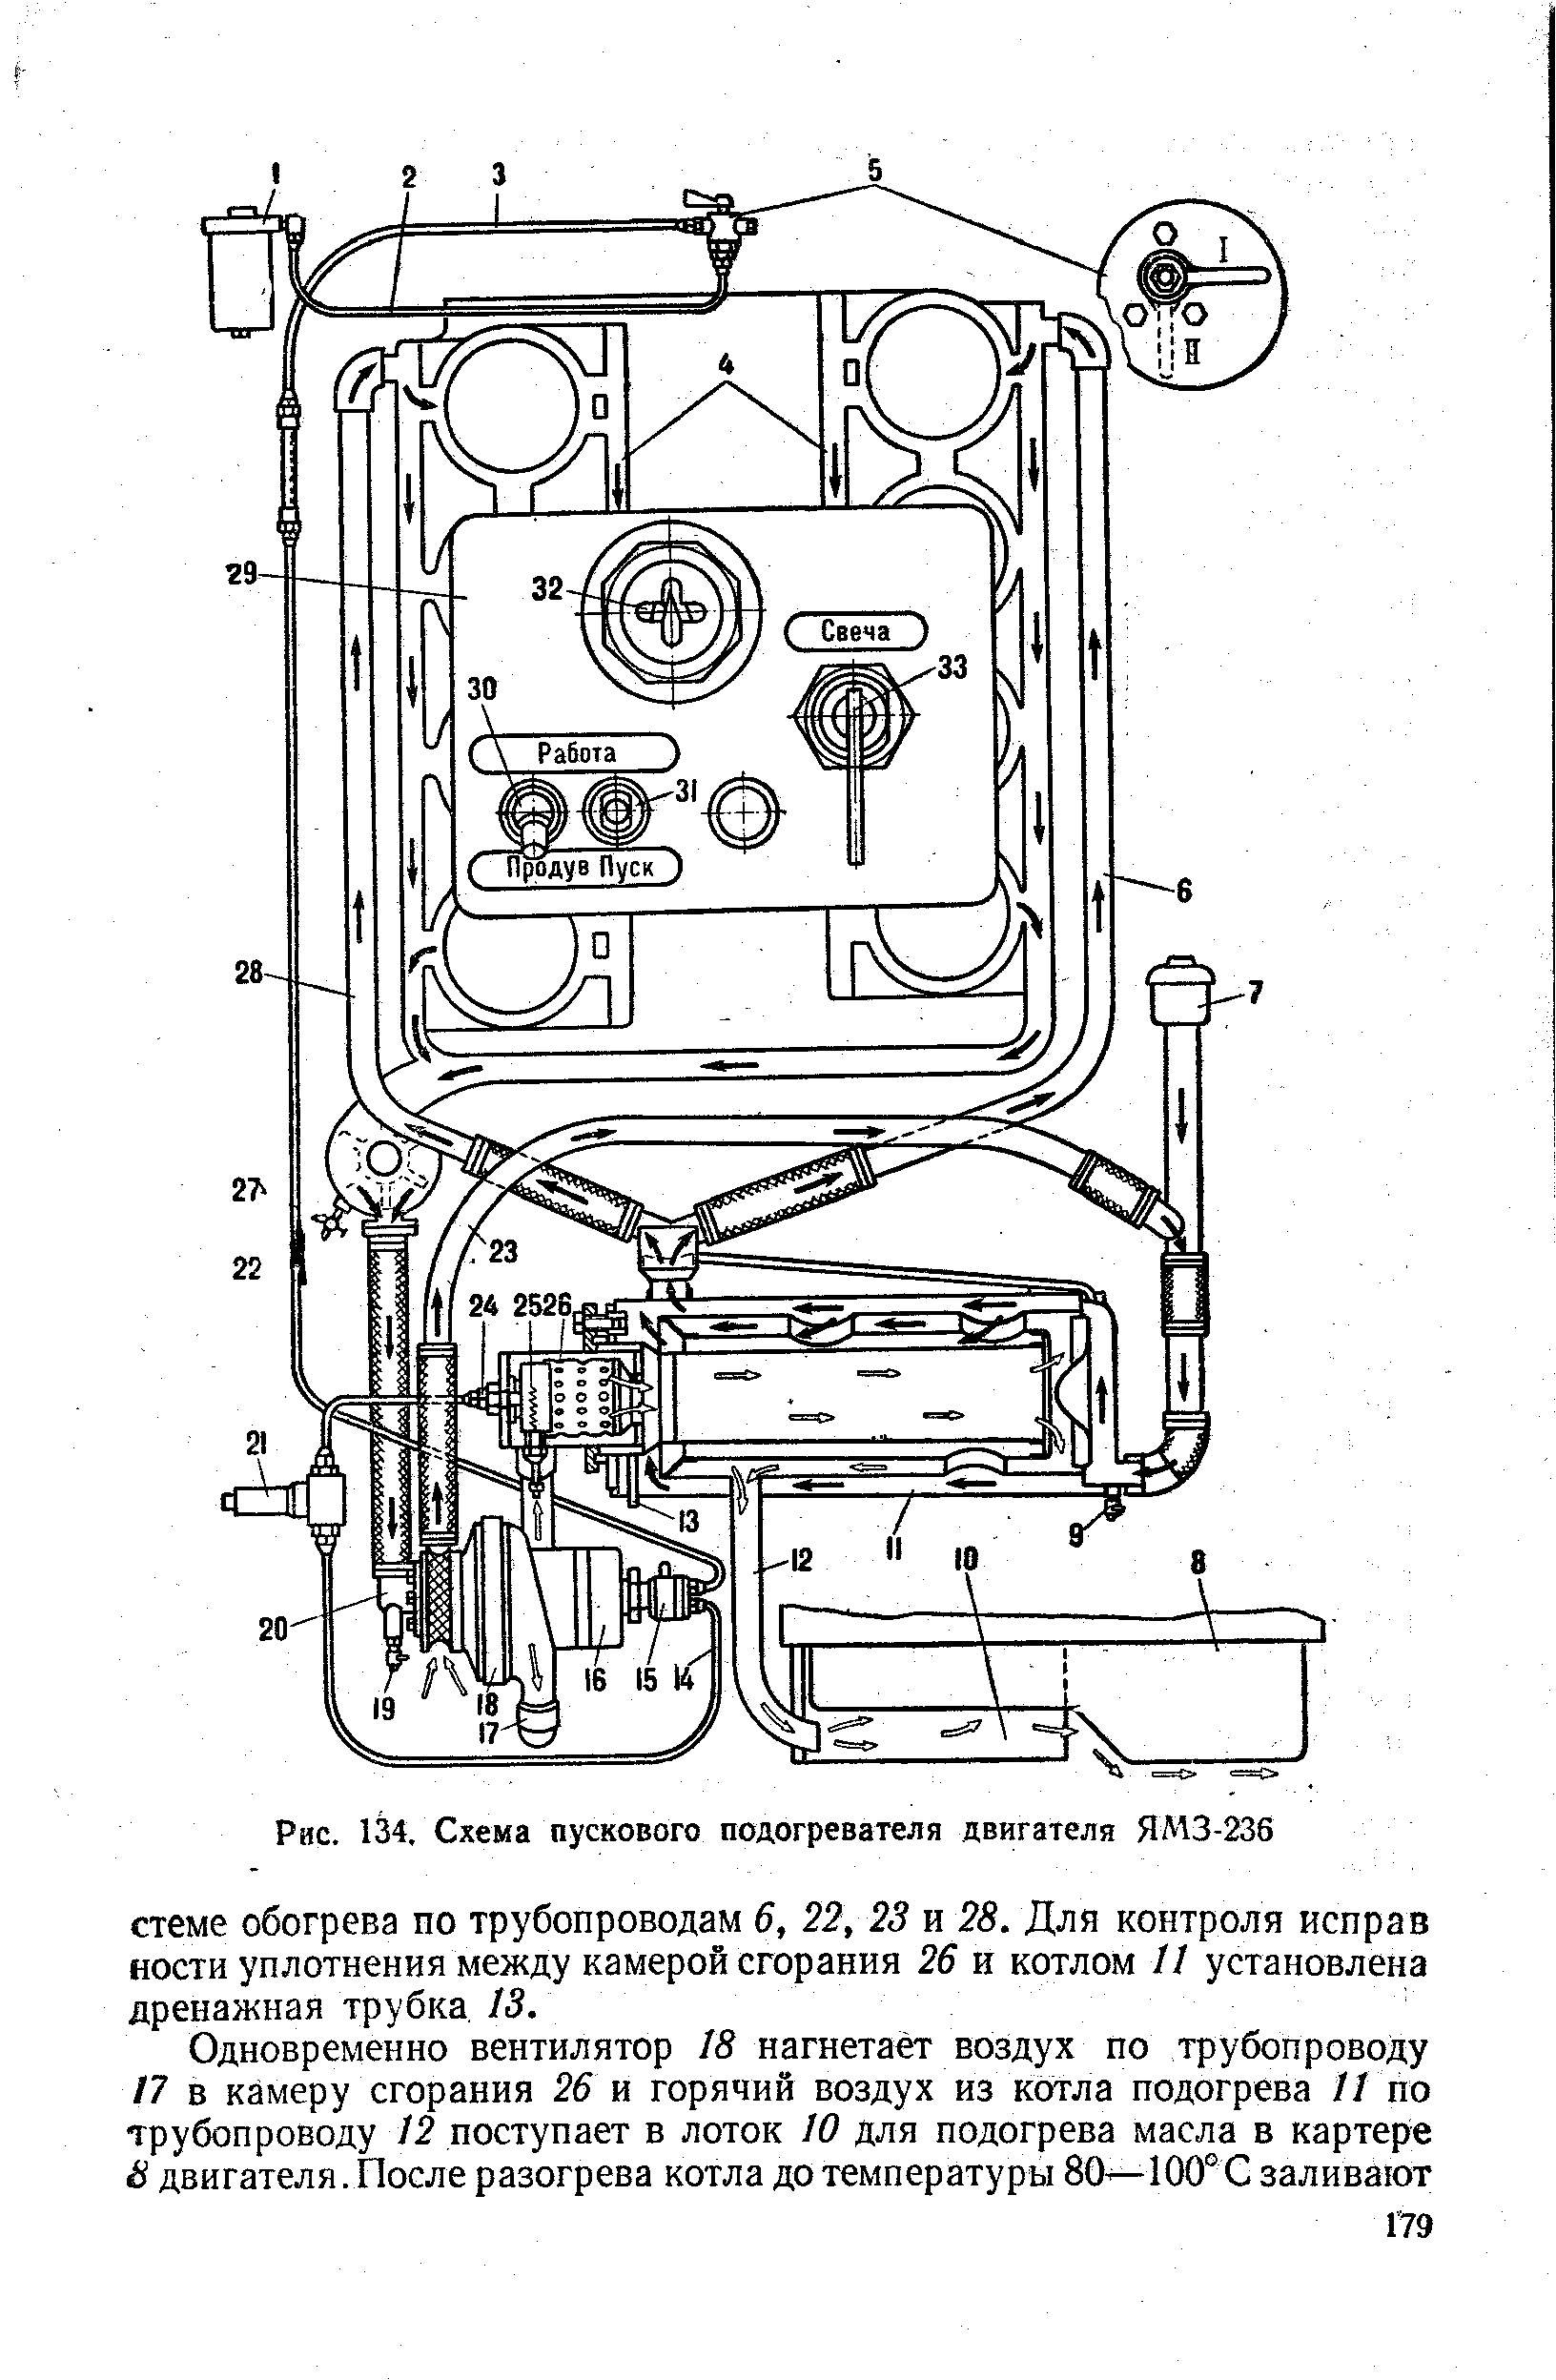 Рис. 134. Схема пускового подогревателя двигателя ЯМЗ-236
